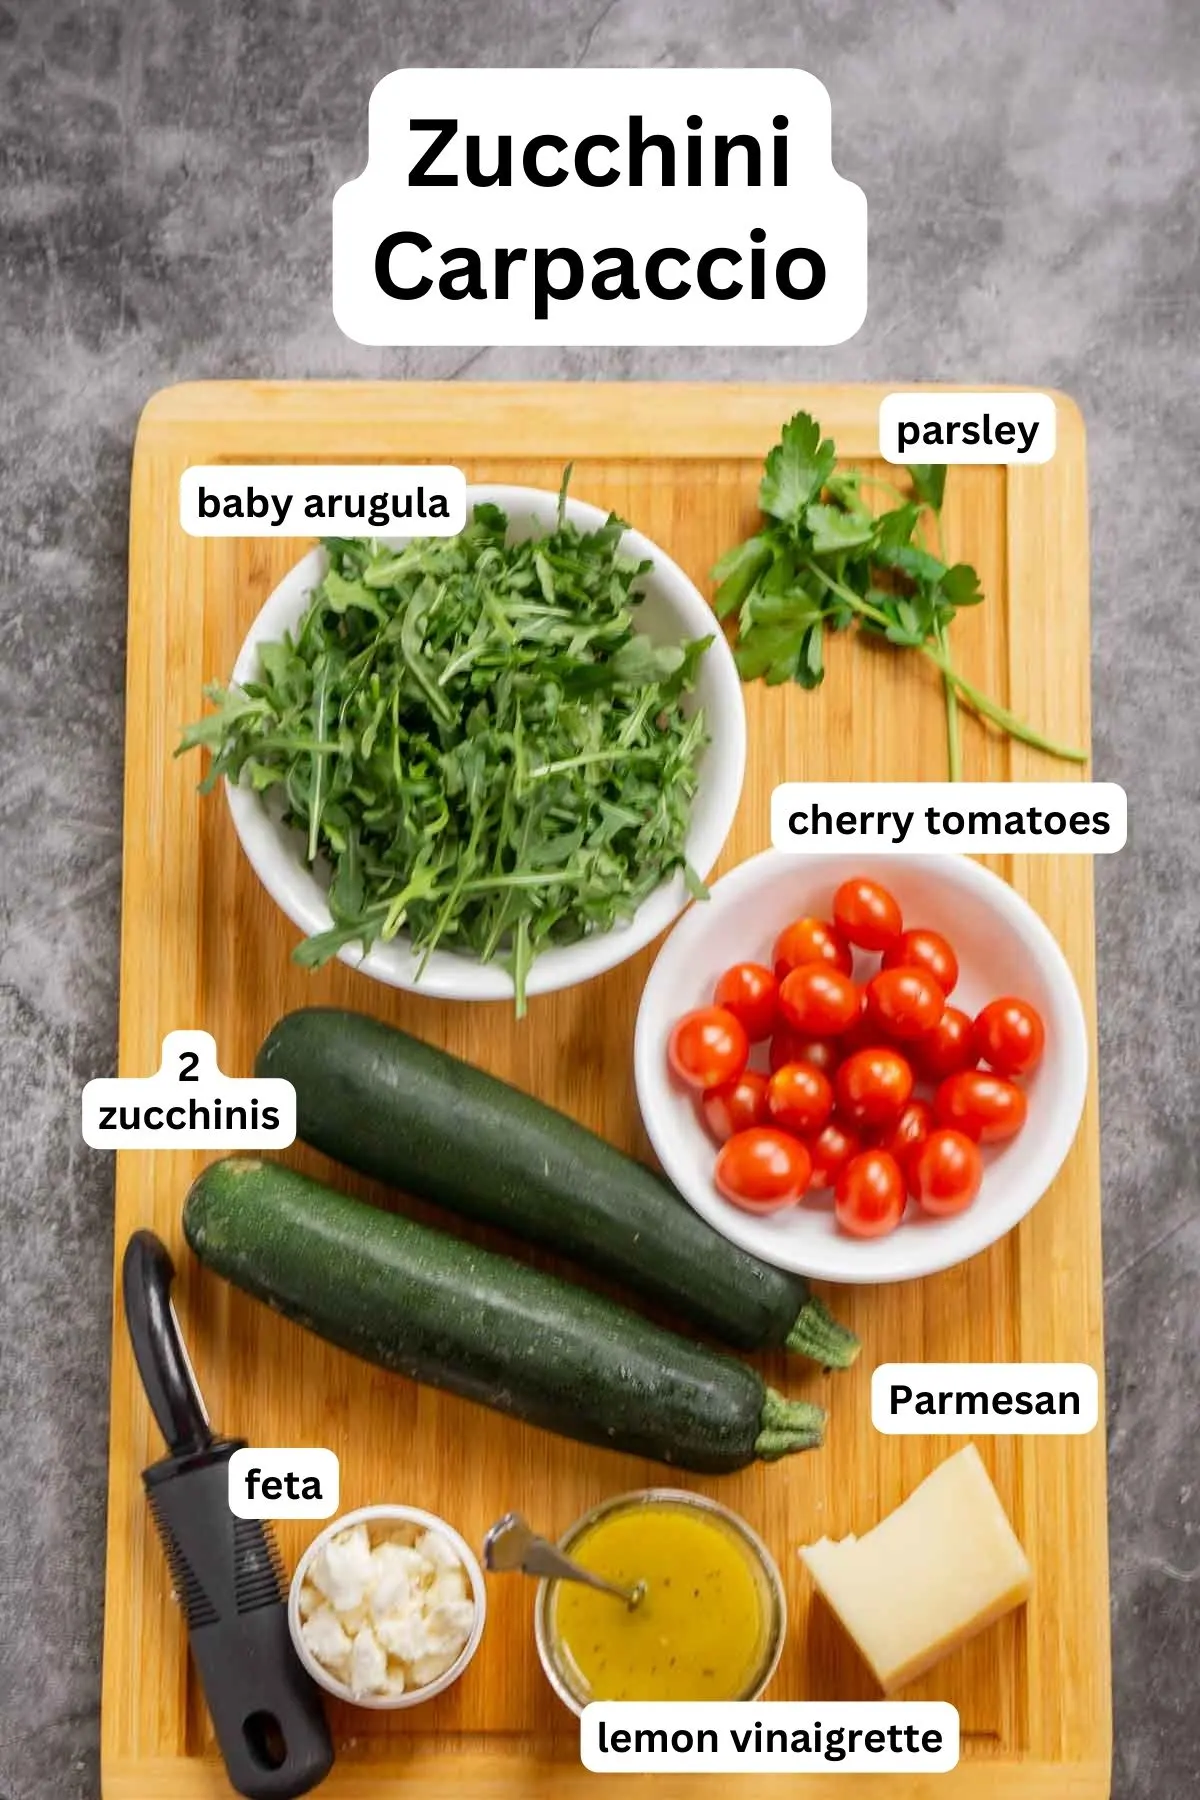 Ingredients to make zucchini carpaccio